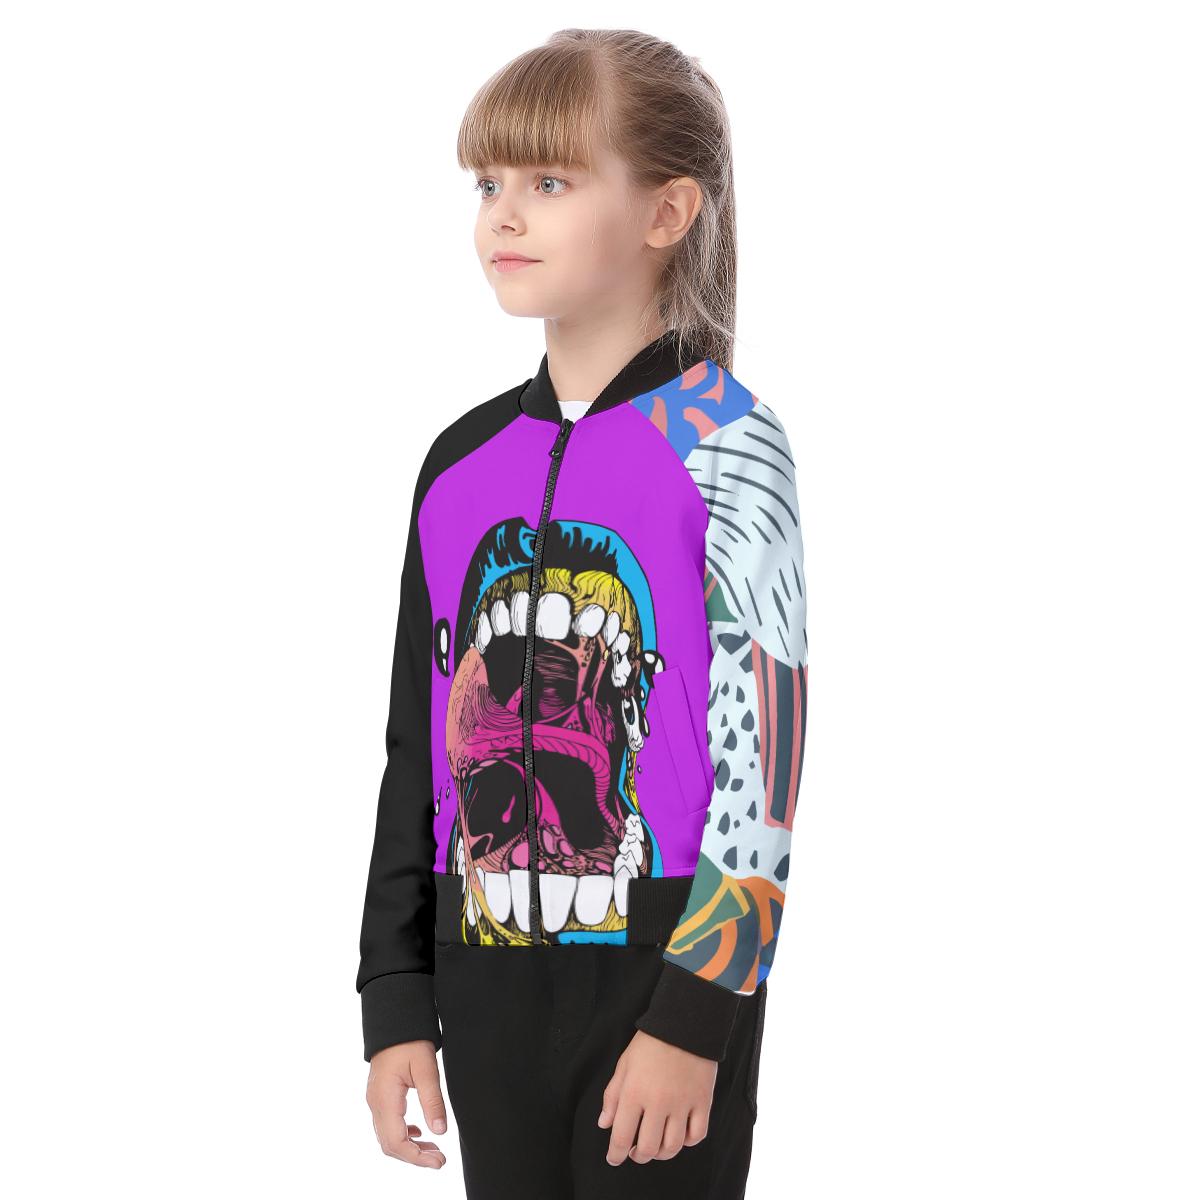 All-Over Print Kid's Raglan Sleeve Jacket